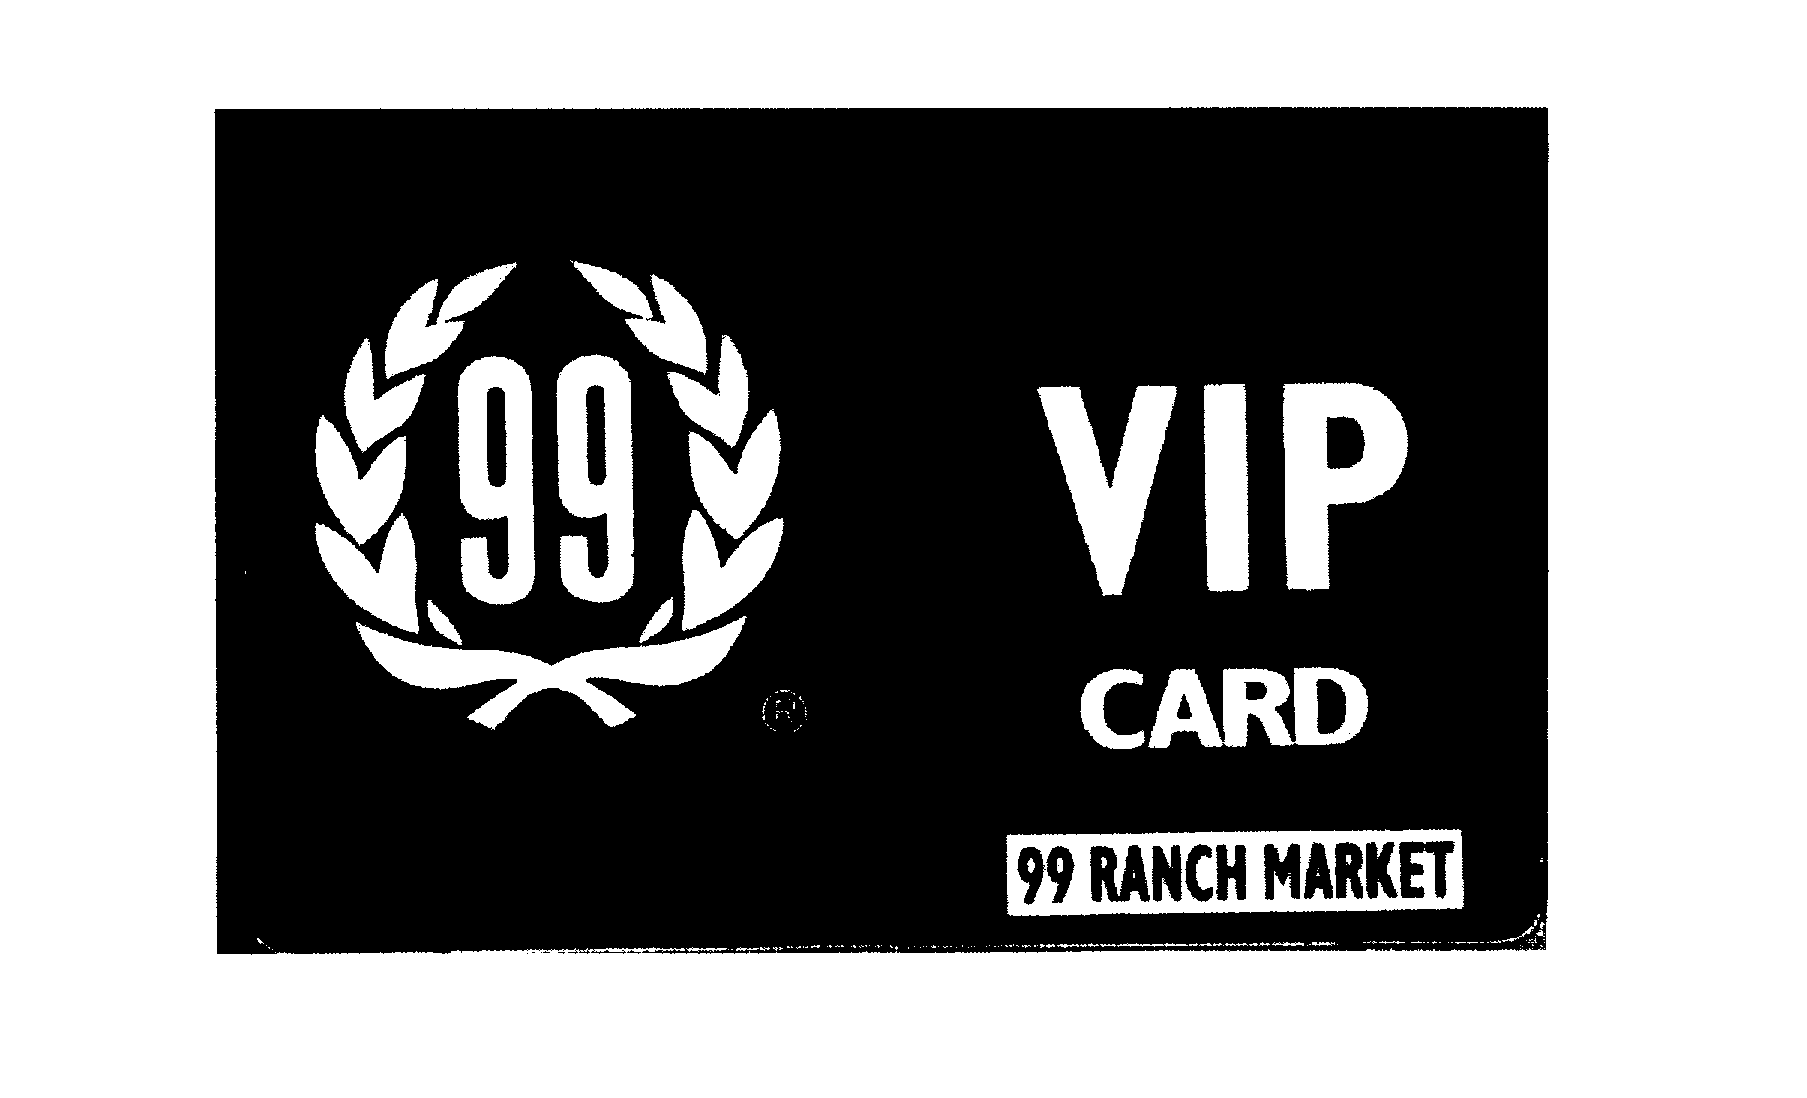  99 RANCH MARKET VIP CARD